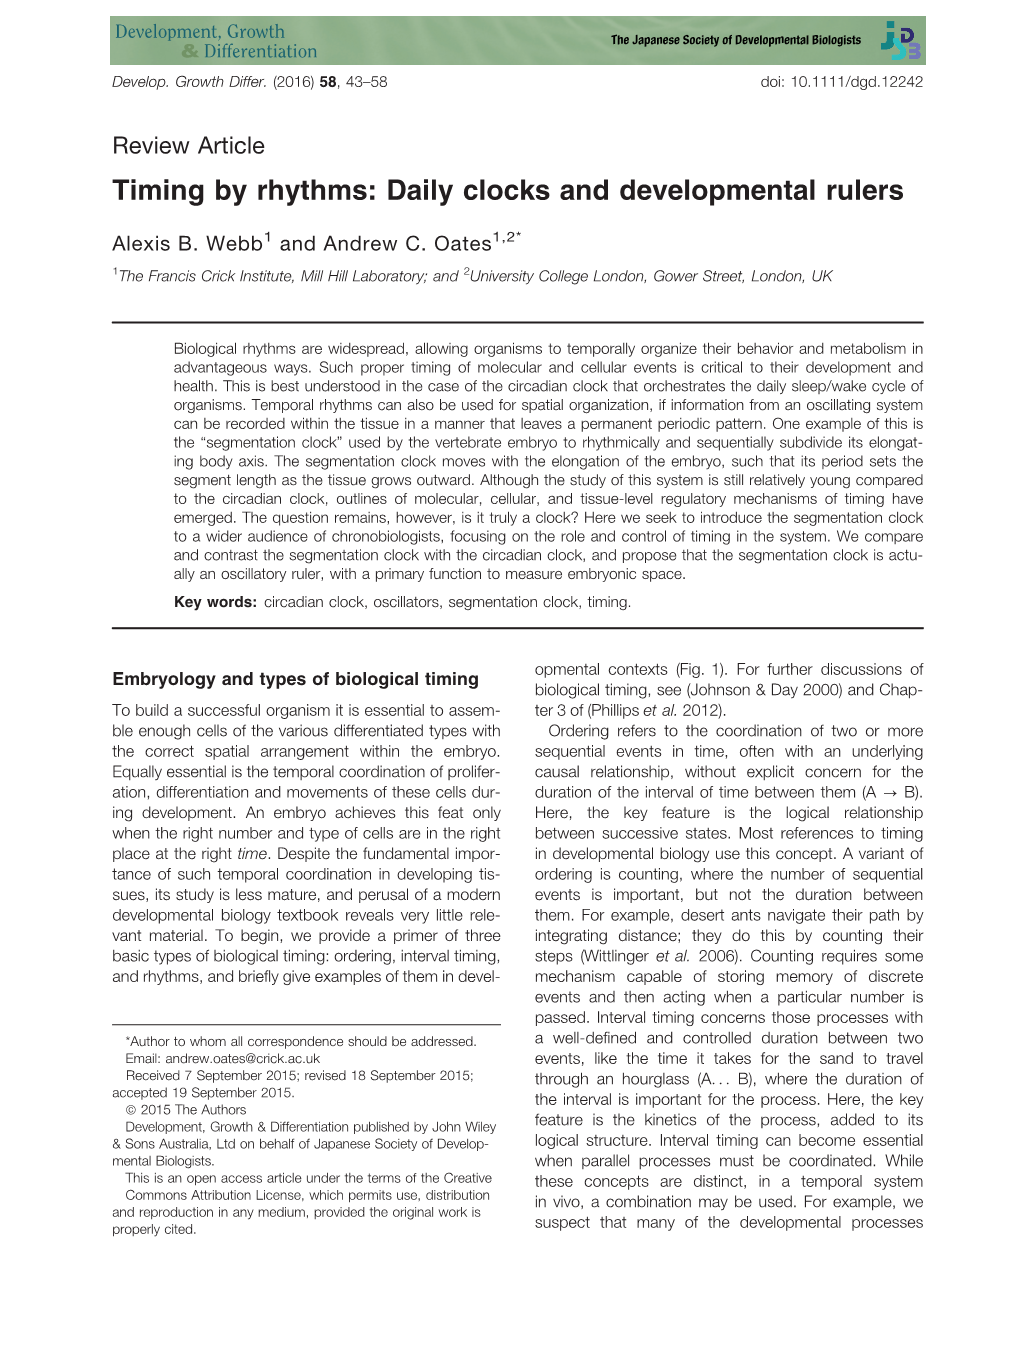 Timing by Rhythms: Daily Clocks and Developmental Rulers